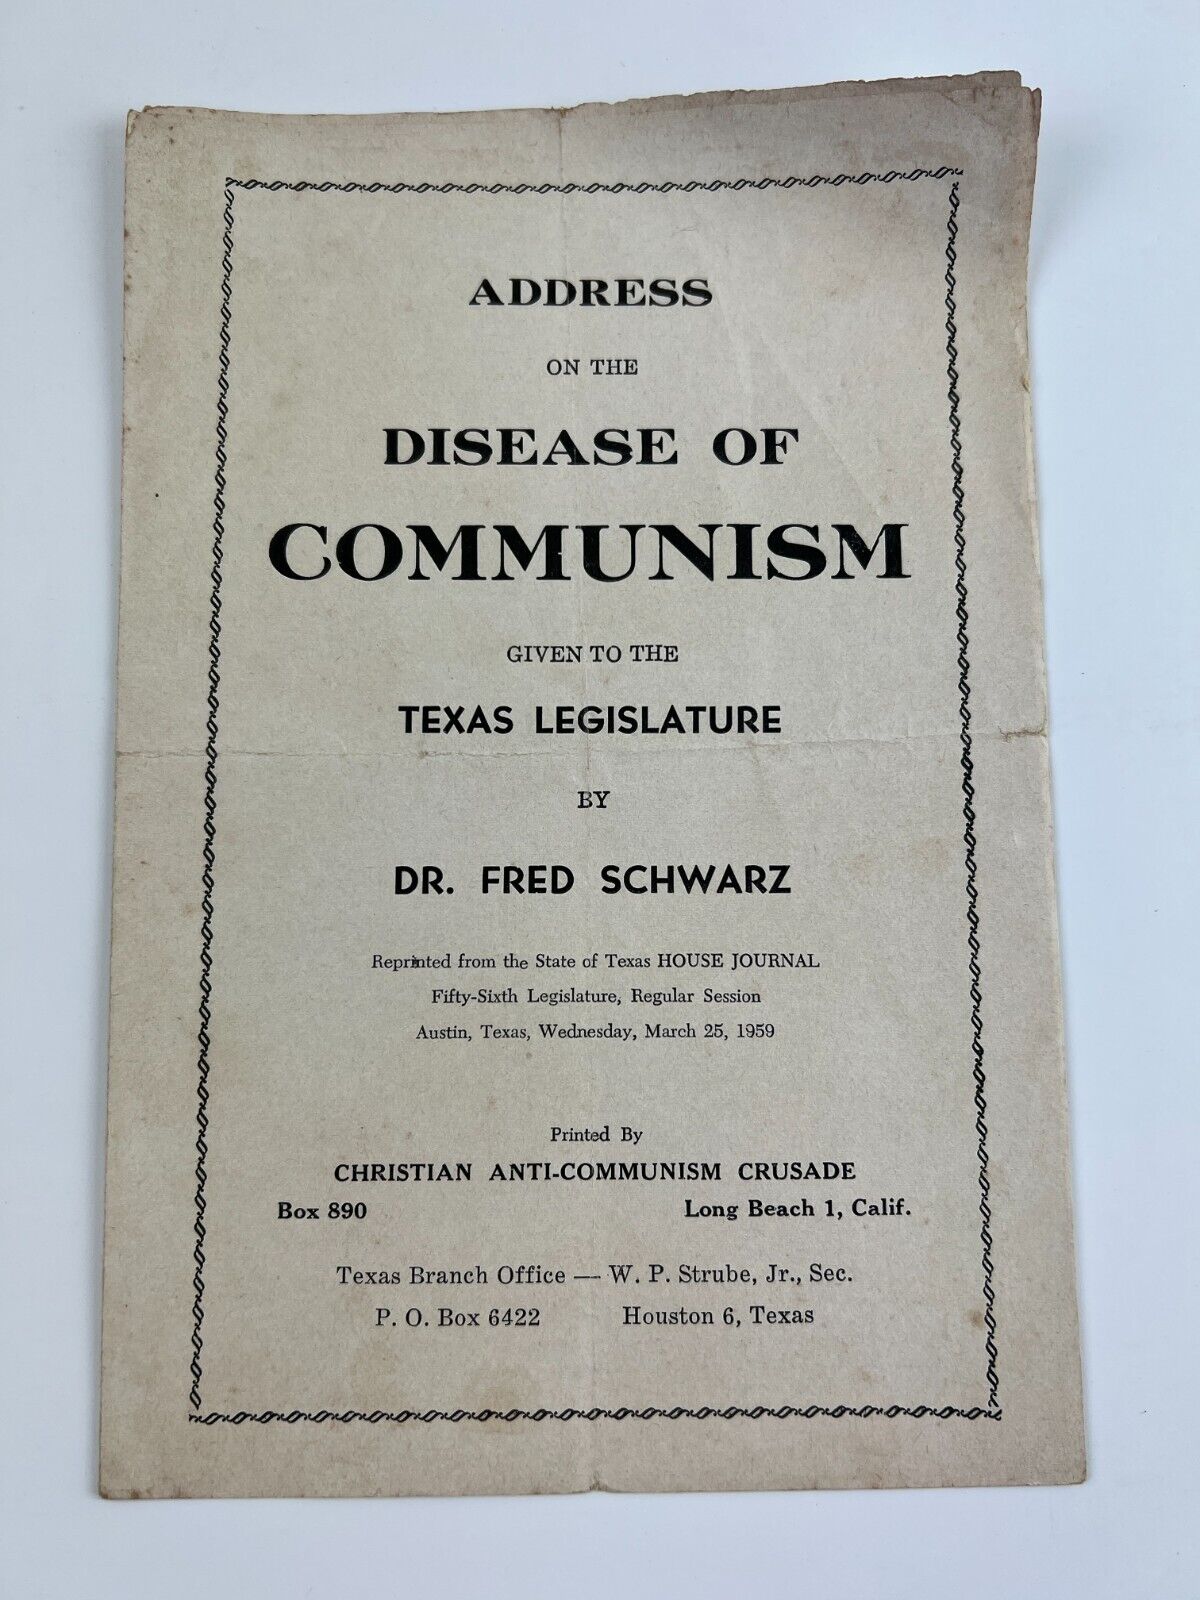 Disease of Communism, Texas Legislature by Dr Fred Schwarz, 1959 Pamphlet, Rare